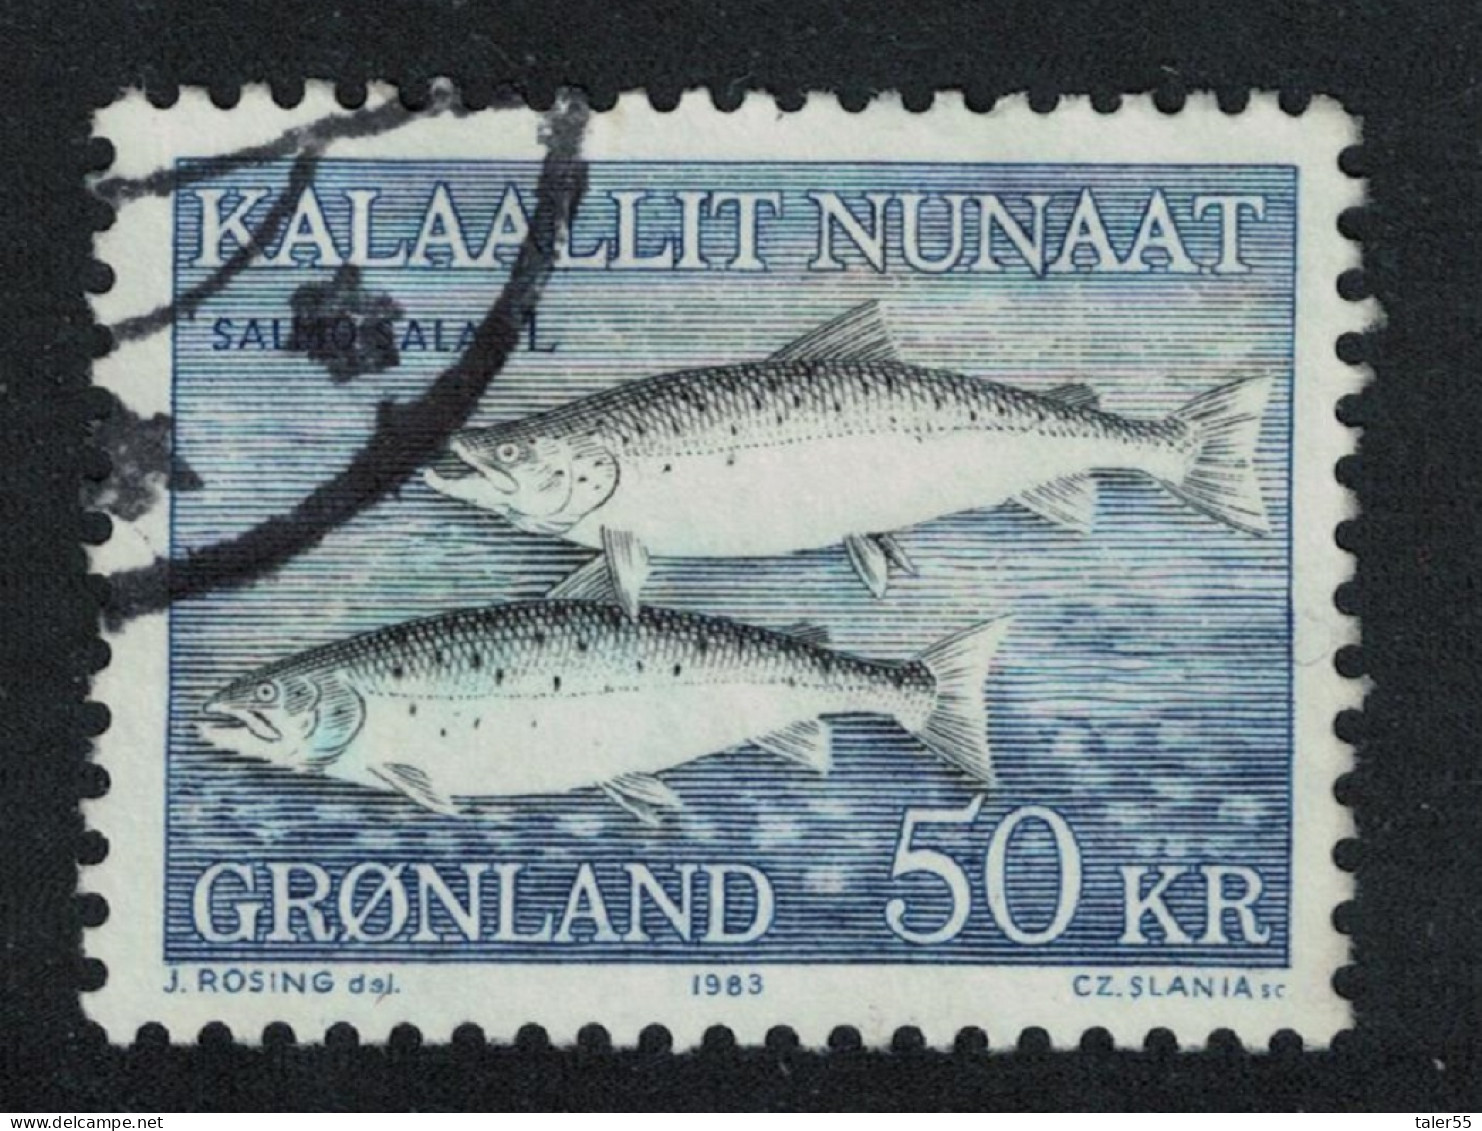 Greenland Atlantic Salmon 50Kr 1983 Canc SG#138 MI#140 Sc#141 - Gebruikt